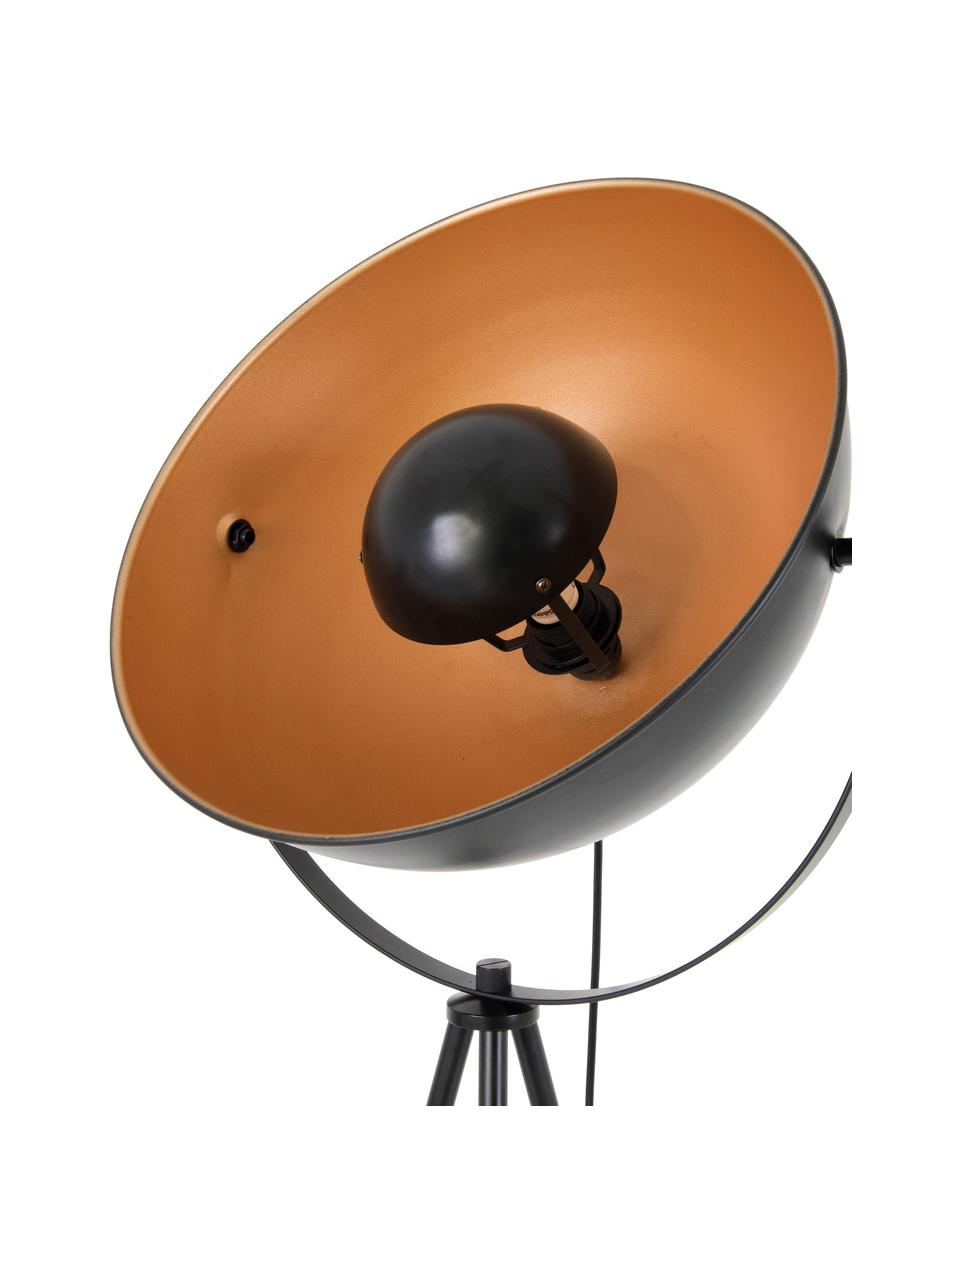 Tripod vloerlamp Bernice, Lampenkap: gecoat metaal, Lampvoet: gecoat metaal, Zwart, oranje, H 150 cm